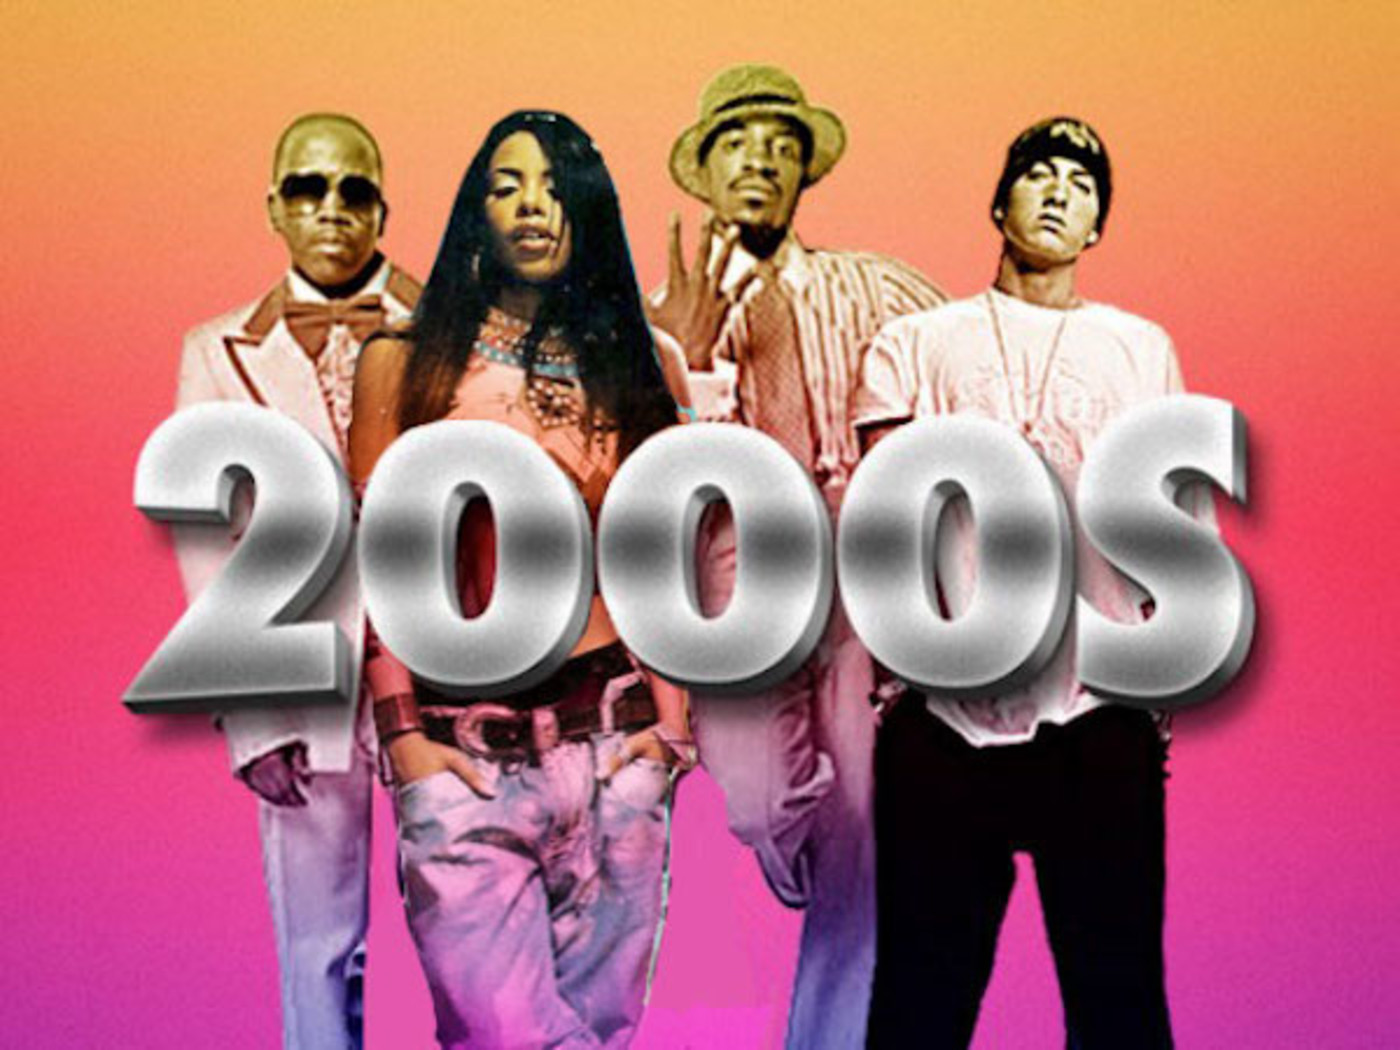 2000 песни зарубежные слушать подряд все. S2000. 2000s Music. 2000s years. Pop Music 2000s.